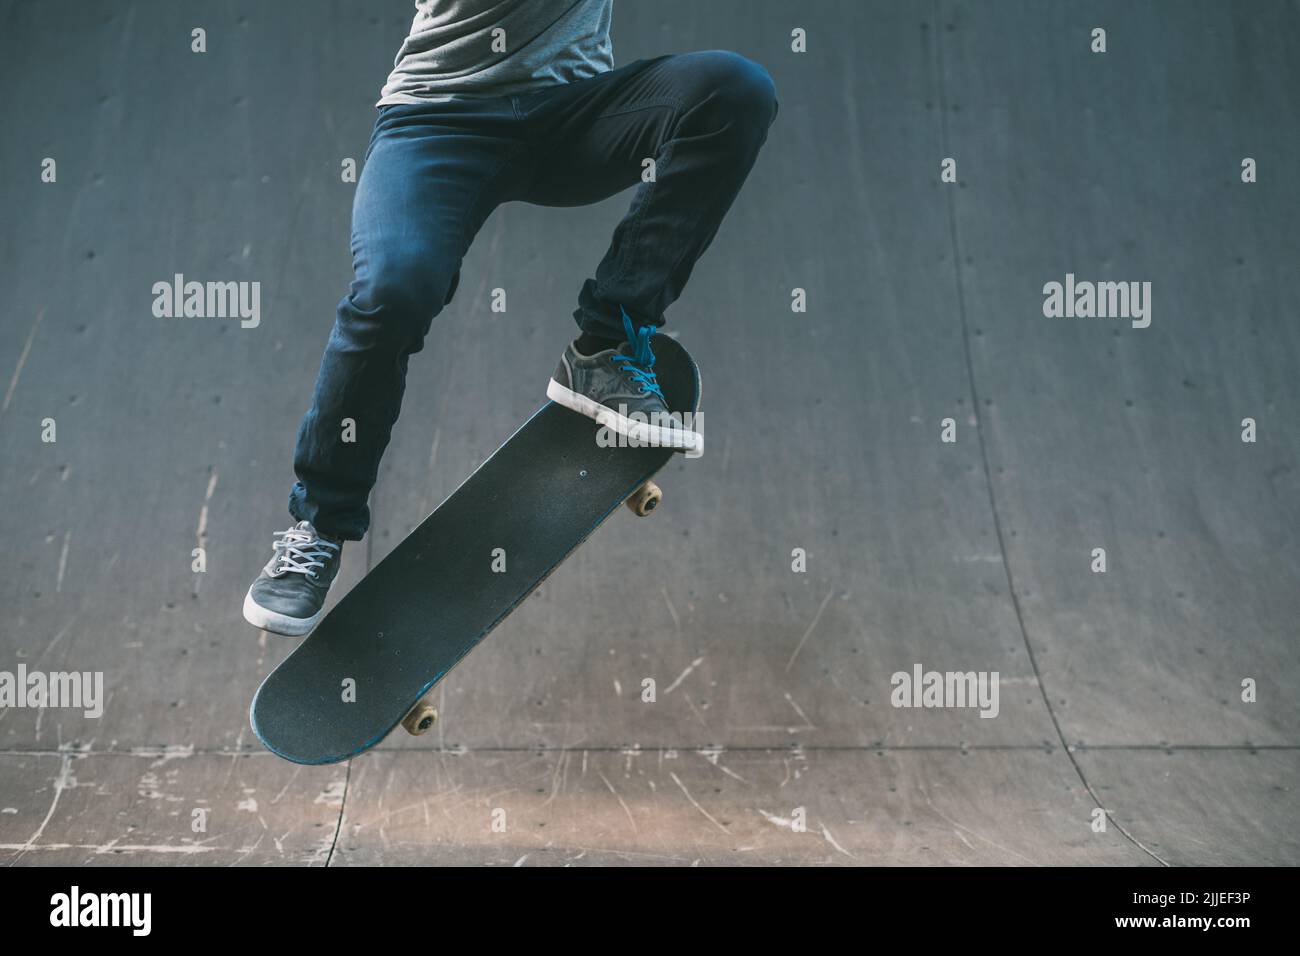 Skateboarder Action extrem Lifestyle ollie Trick Stockfoto